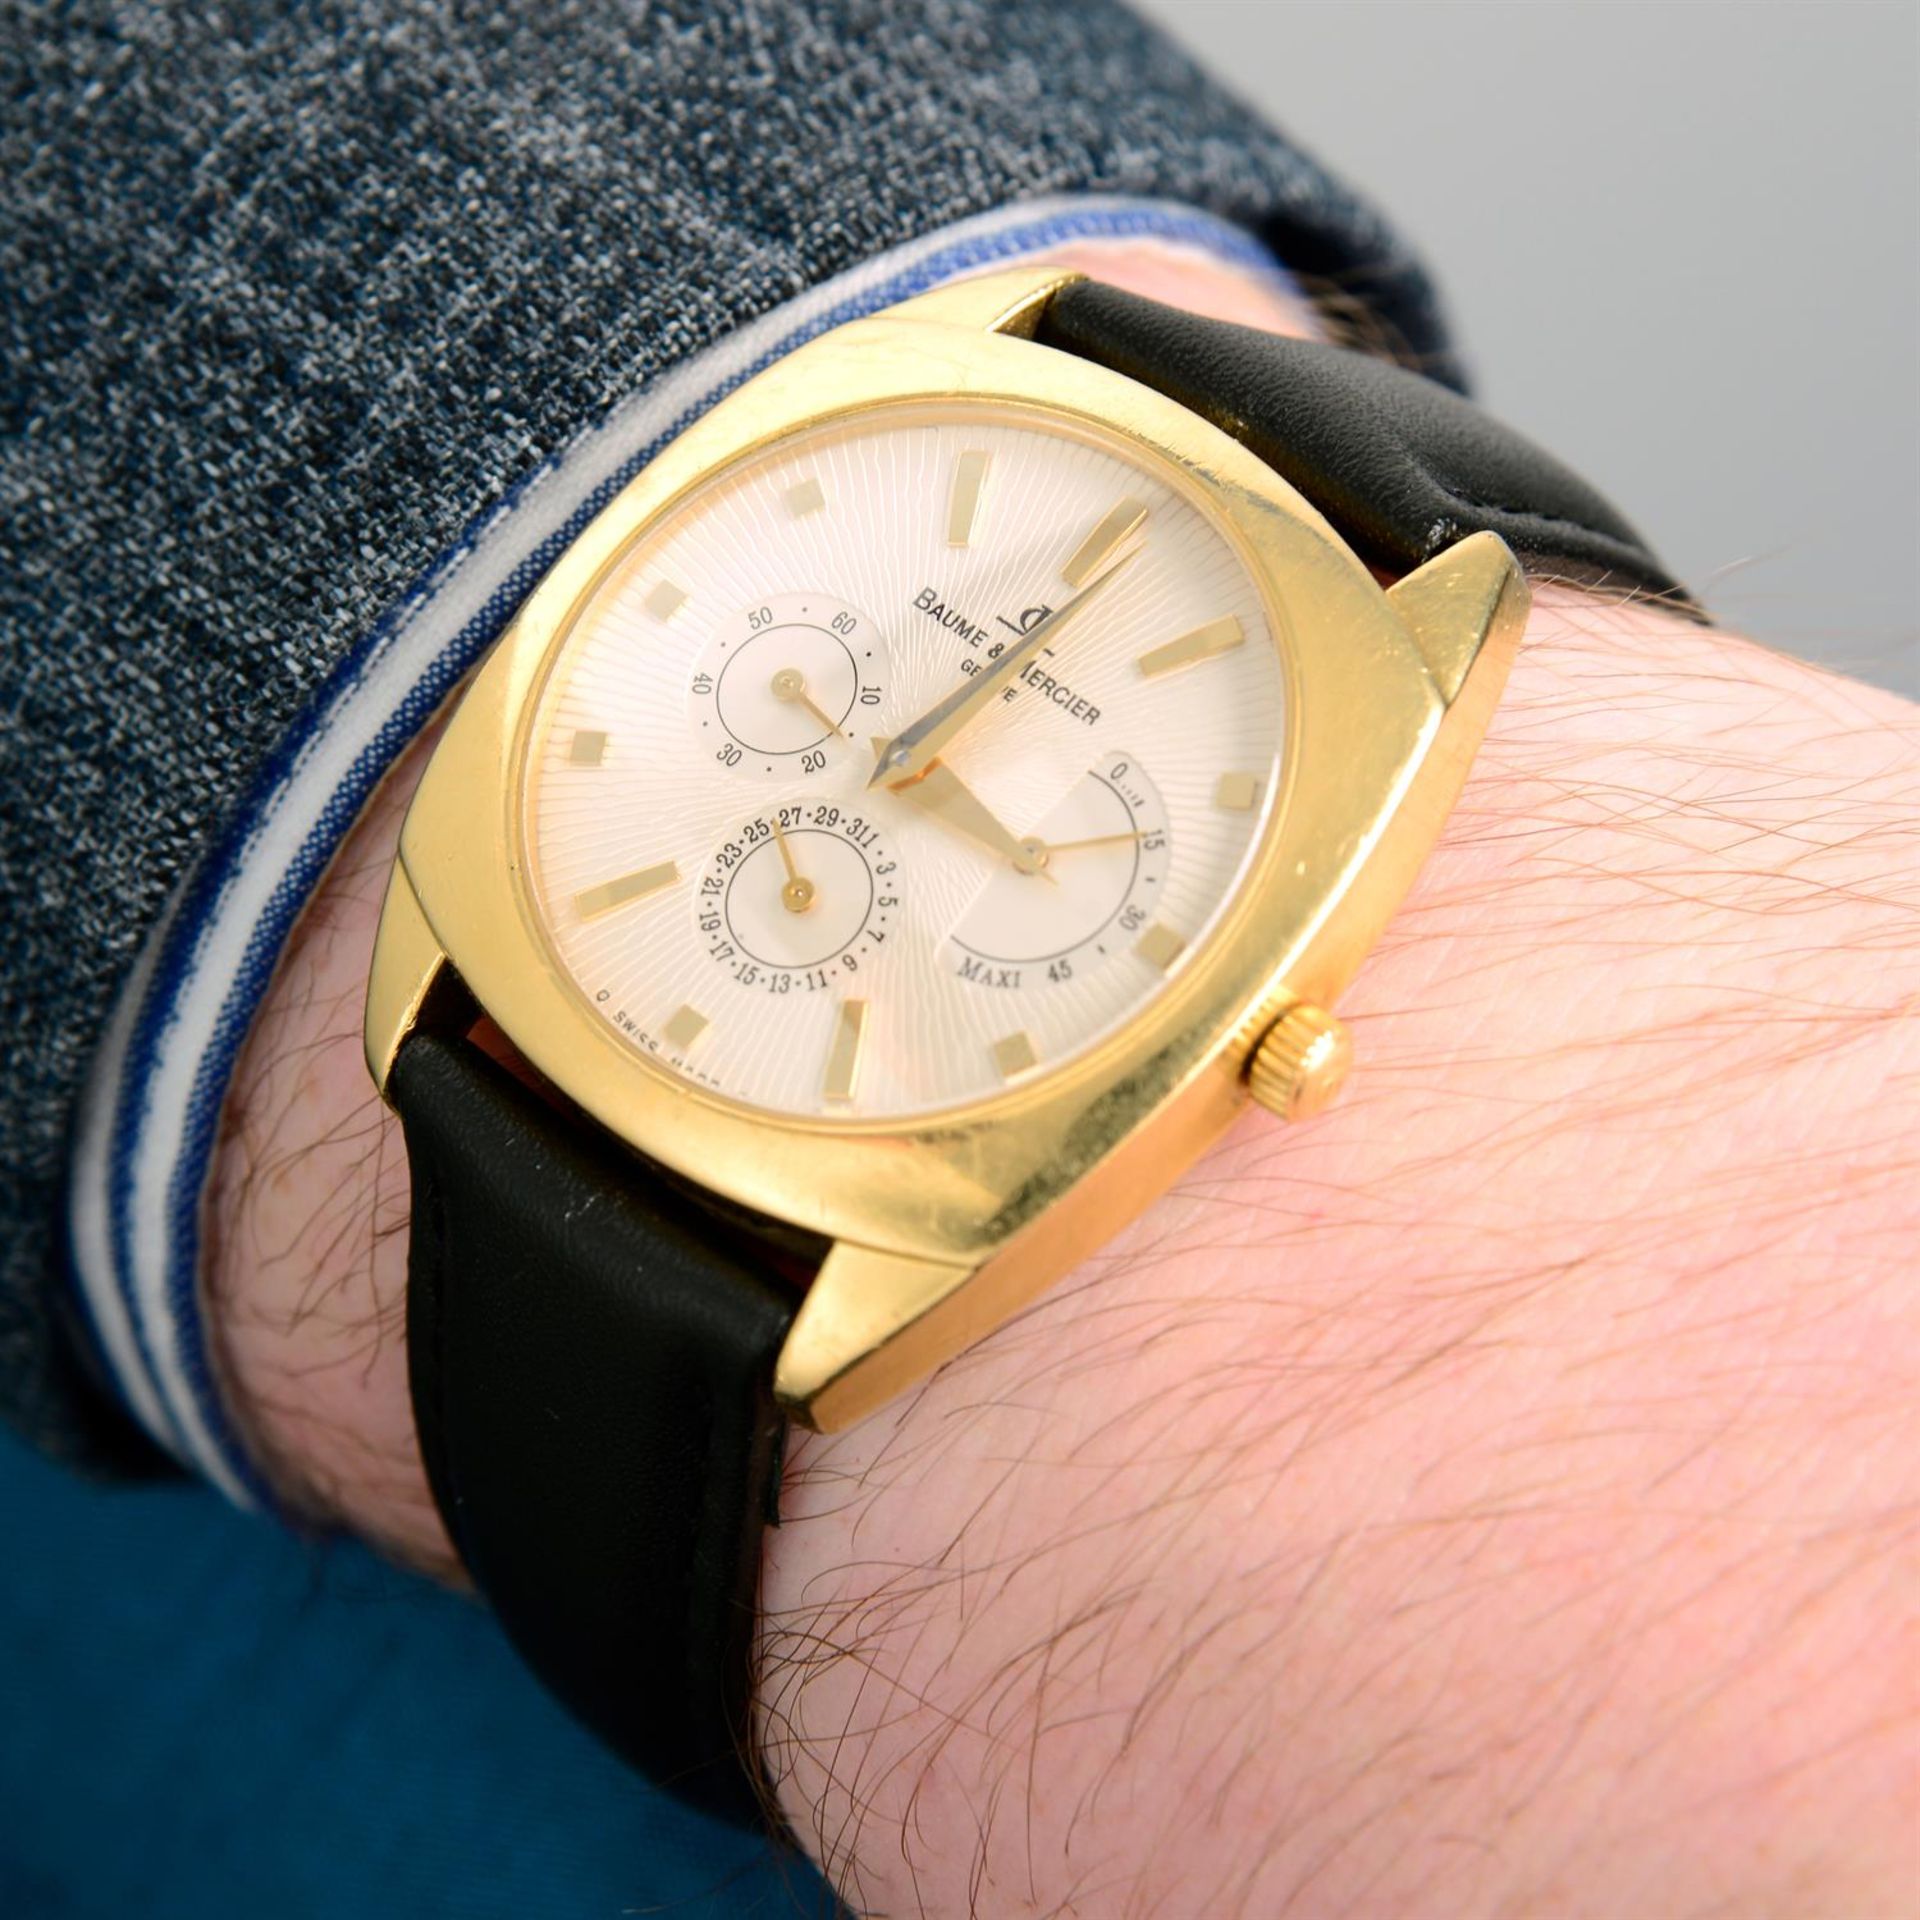 Baume & Mercier - a watch, 33mm. - Image 6 of 6